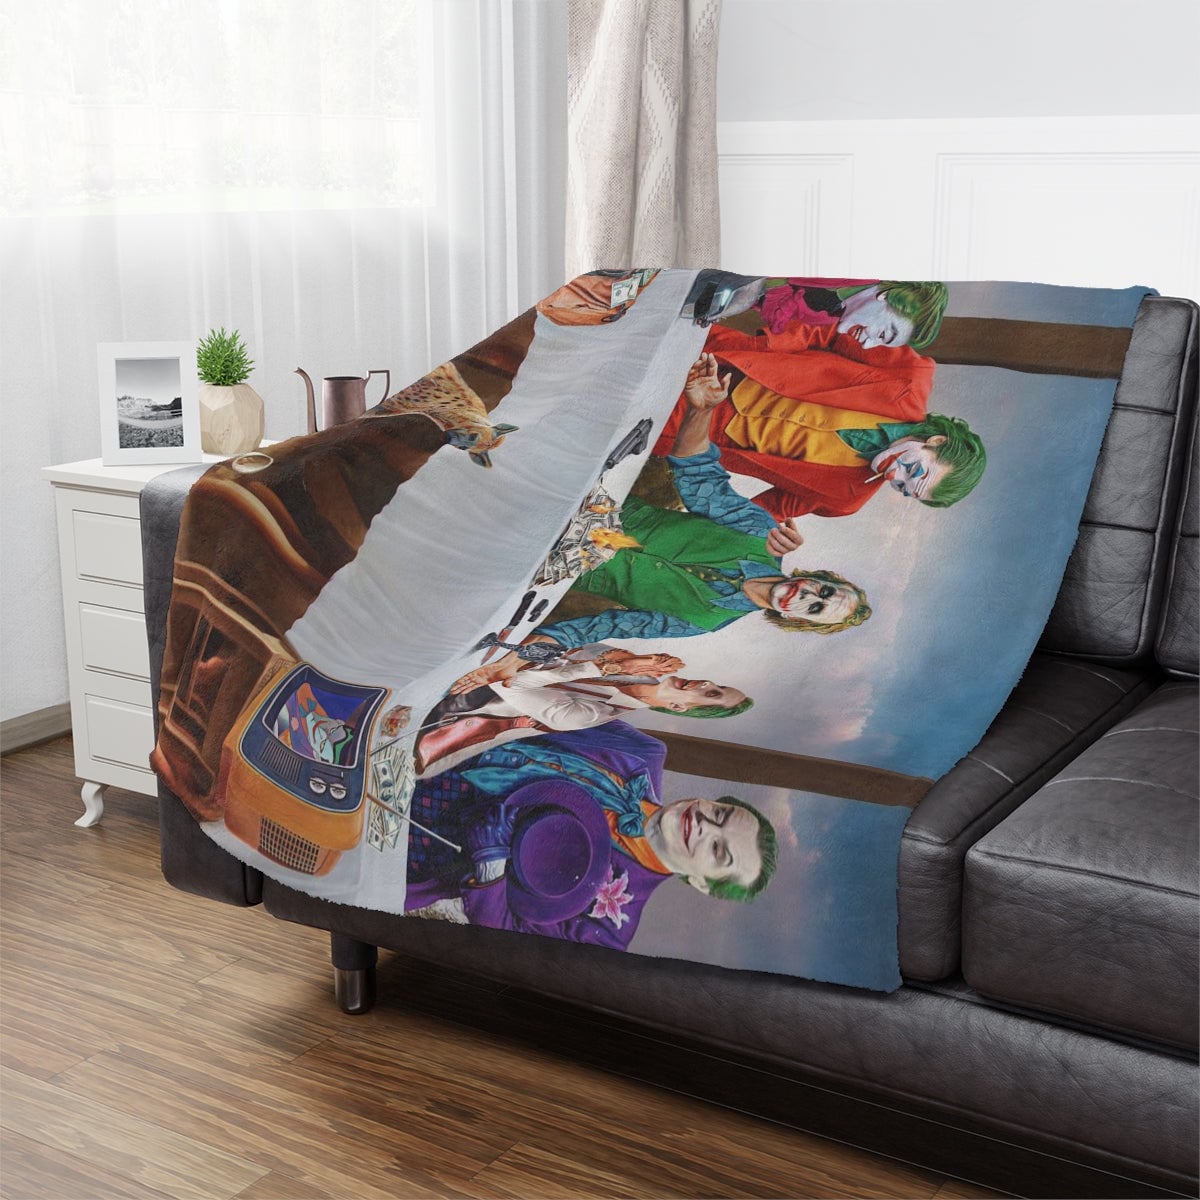 The Last Supper Jokers Blanket - Artistic and Humorous Minky Blanket